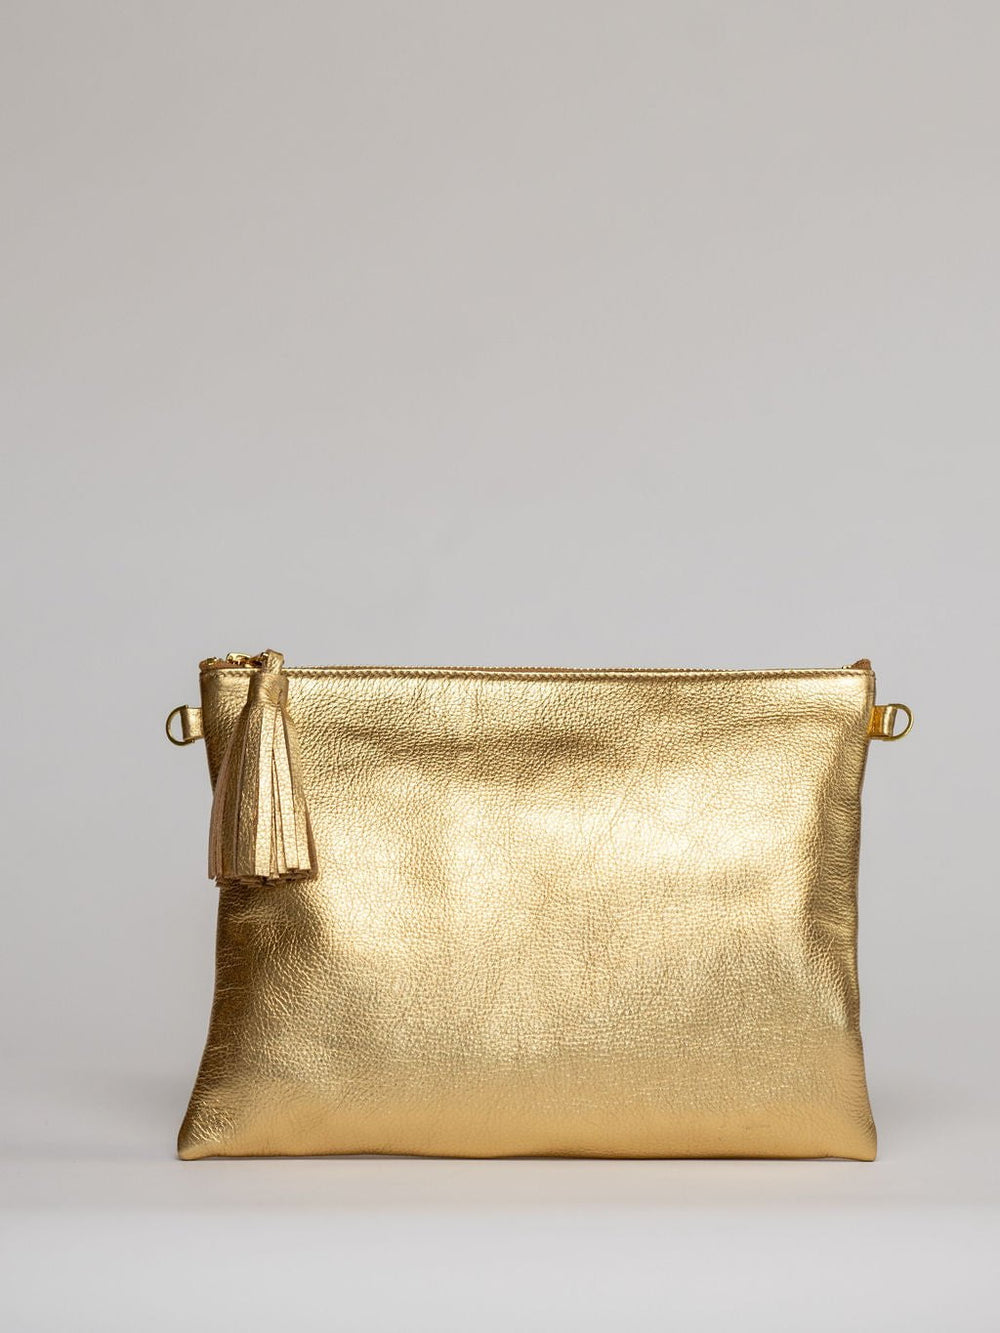 Beau & Ro Clutch + Crossbody Metallic Gold / One Size The Sconset Clutch + Crossbody Bag | Gold